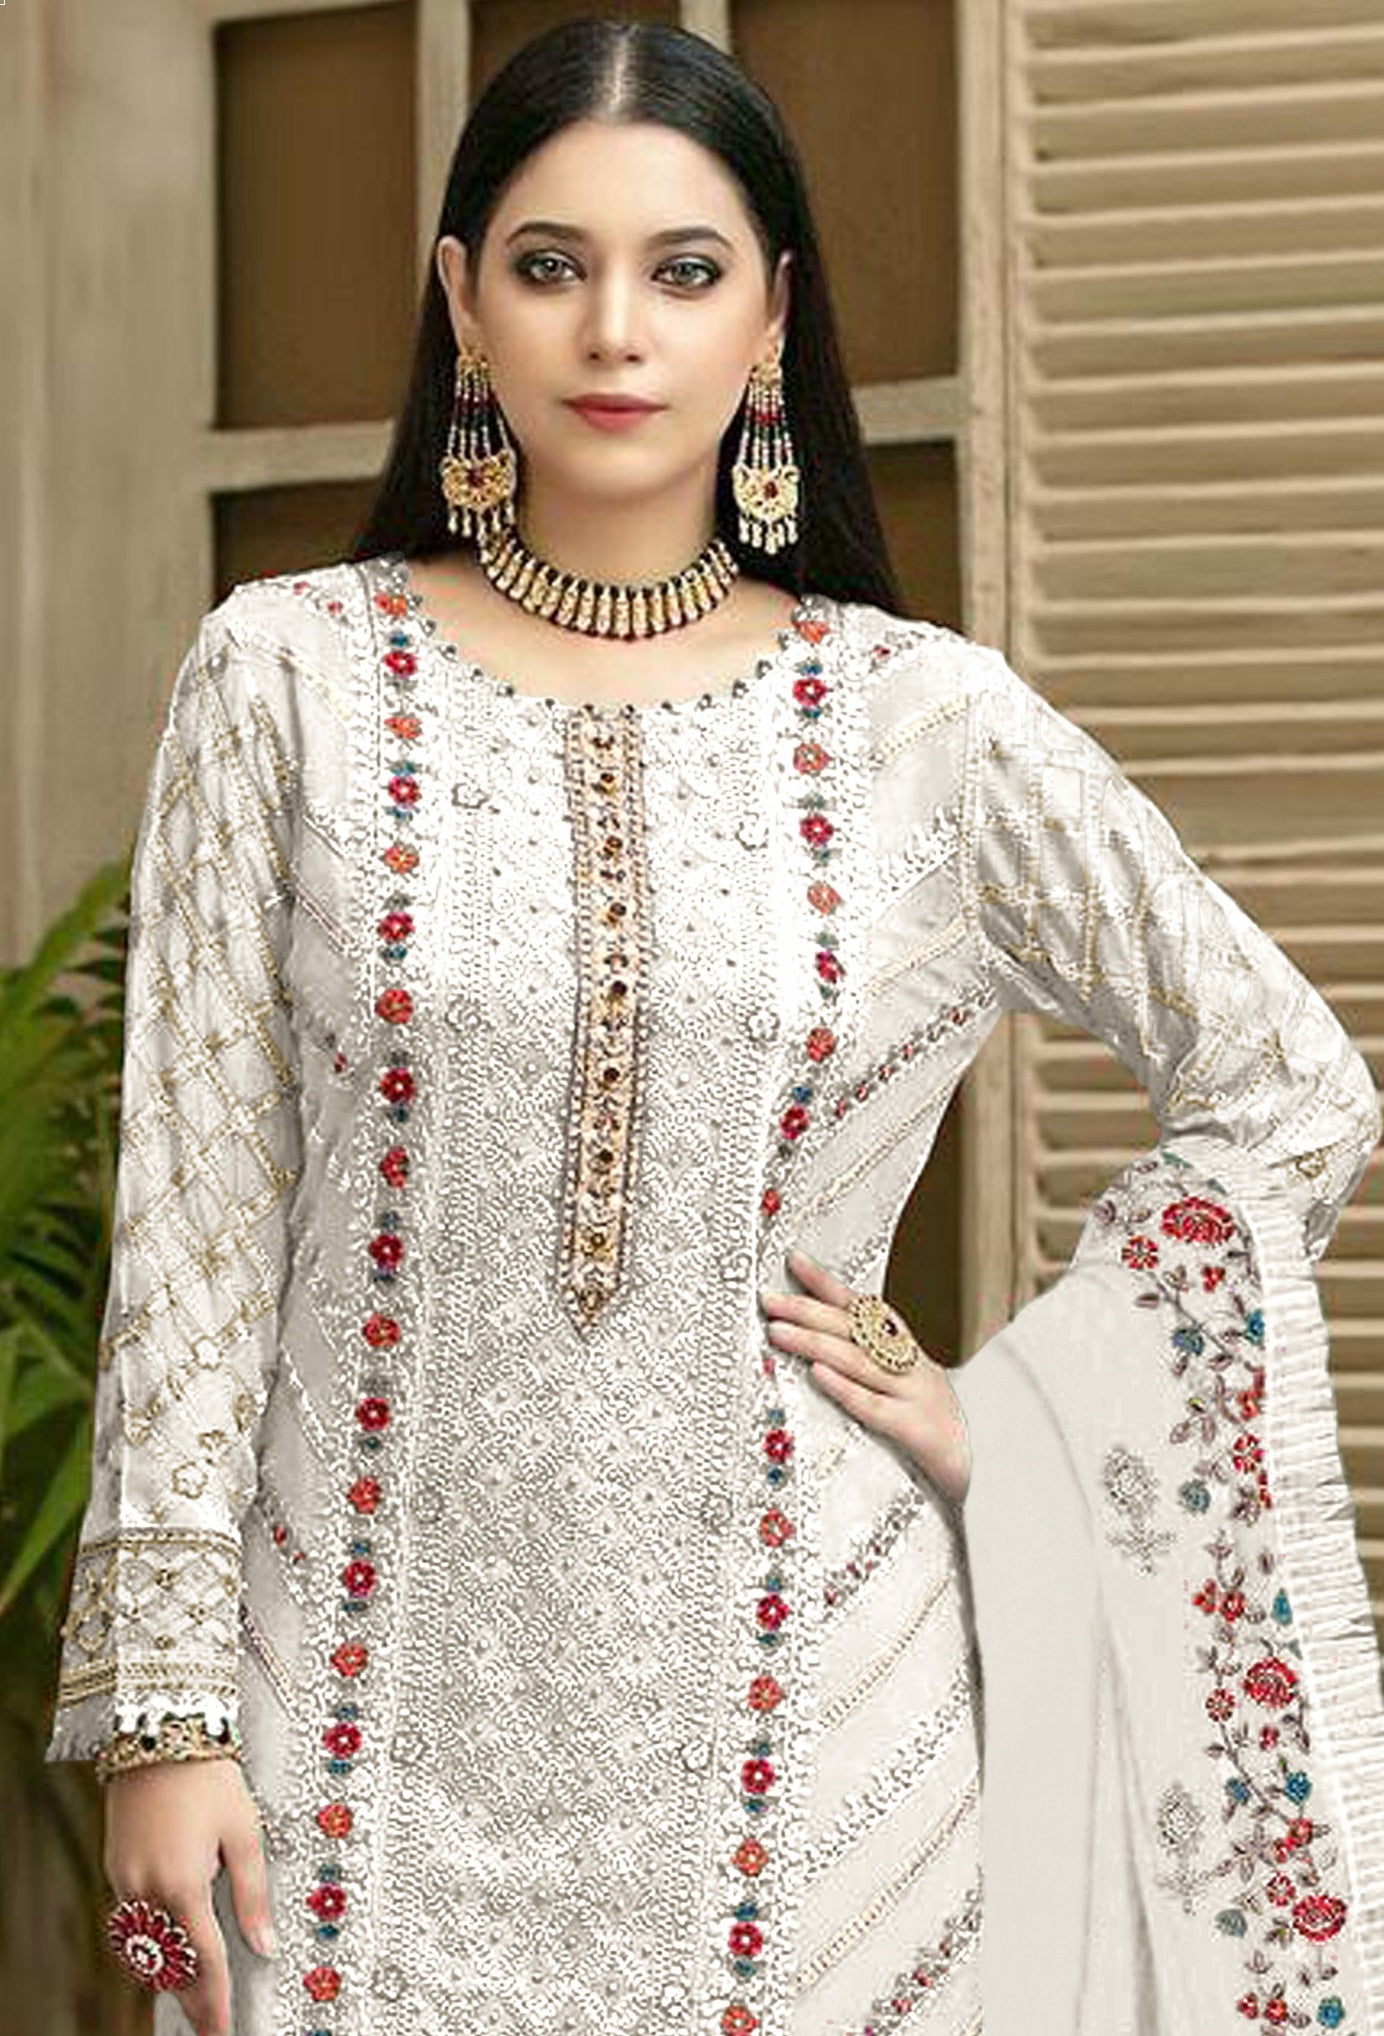 WHiTE DRESS | Lace dress design, Beautiful pakistani dresses, Party wear  dresses